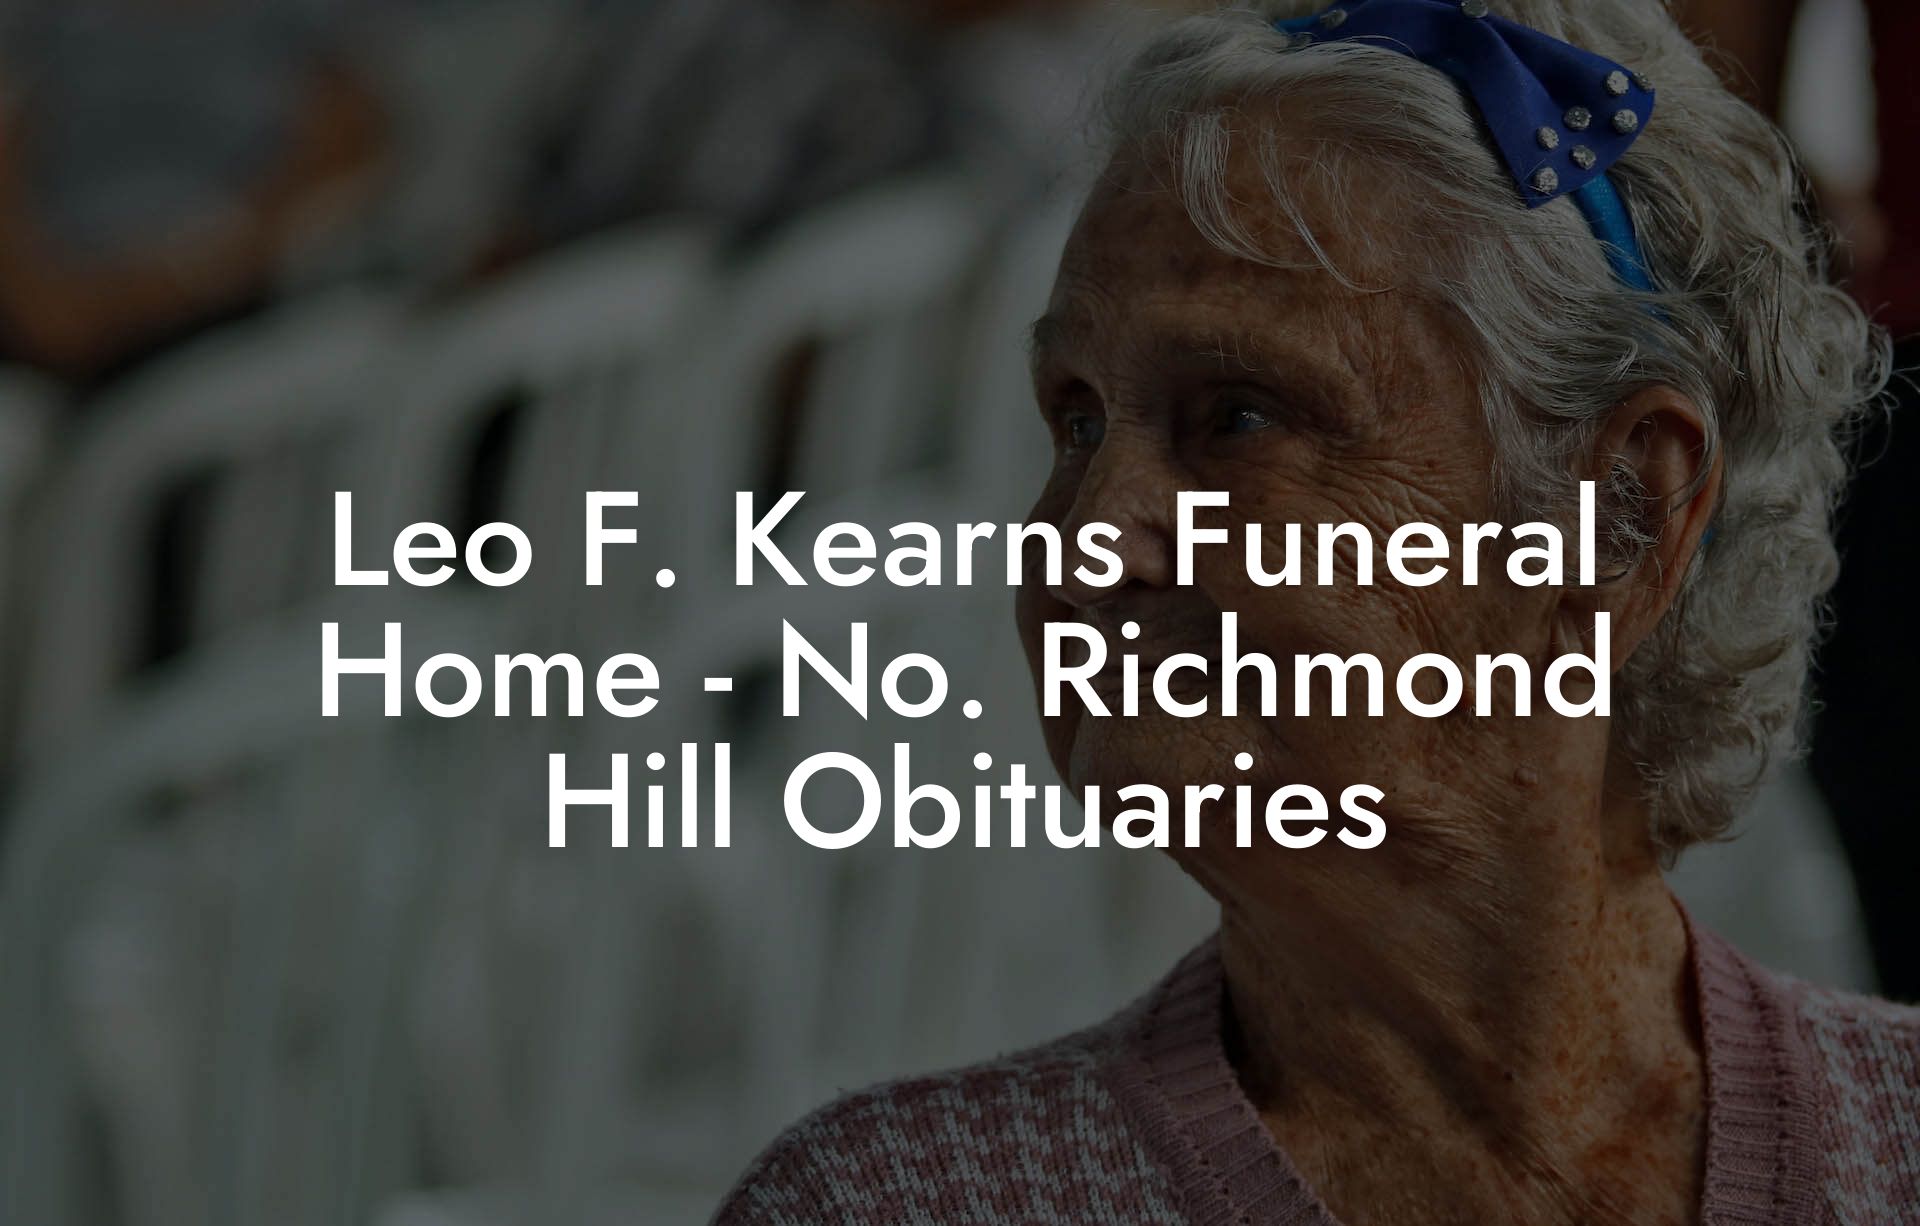 Leo F. Kearns Funeral Home - No. Richmond Hill Obituaries